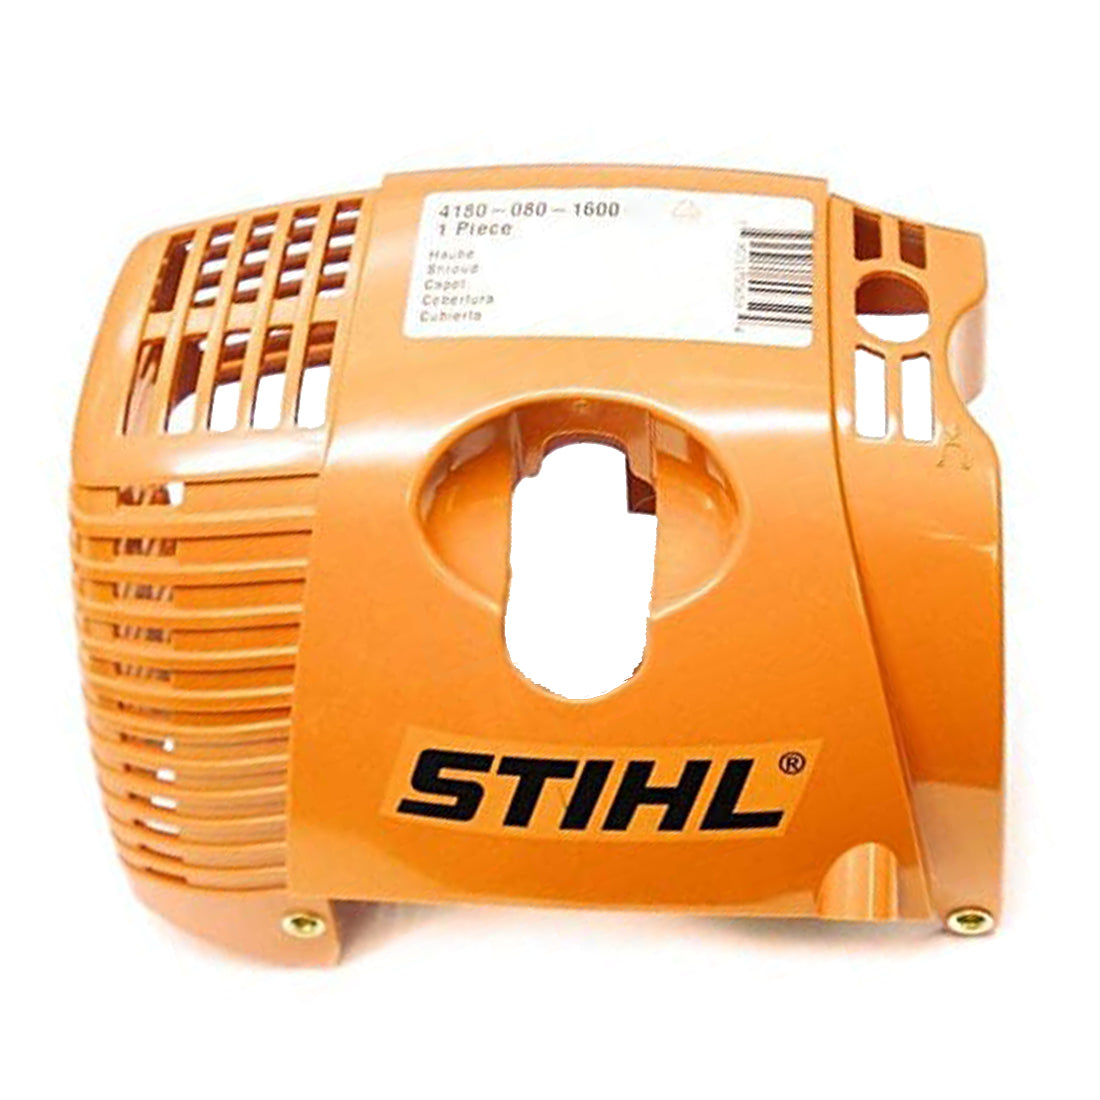 Pochette a outils Stihl - Ref : 0000-891-0810